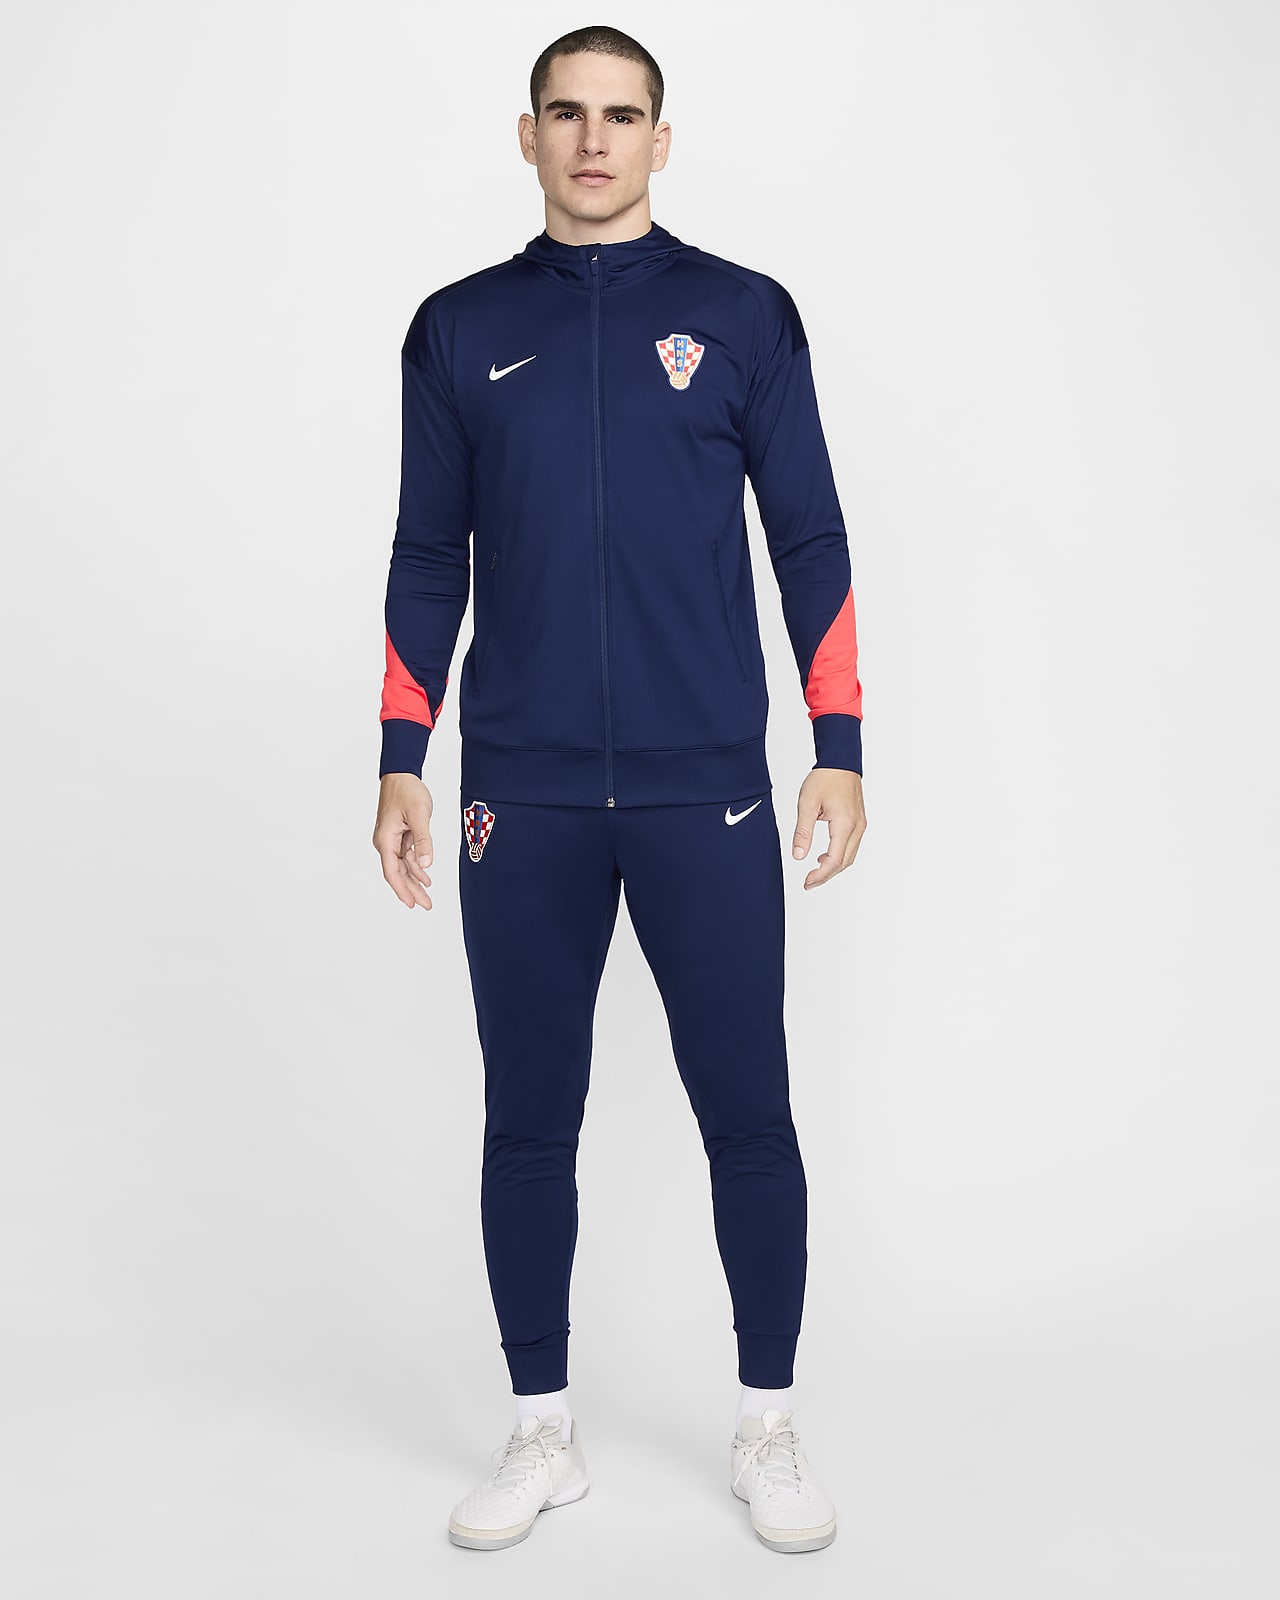 Croacia Strike Chándal de fútbol con capucha Nike Dri-FIT - Hombre